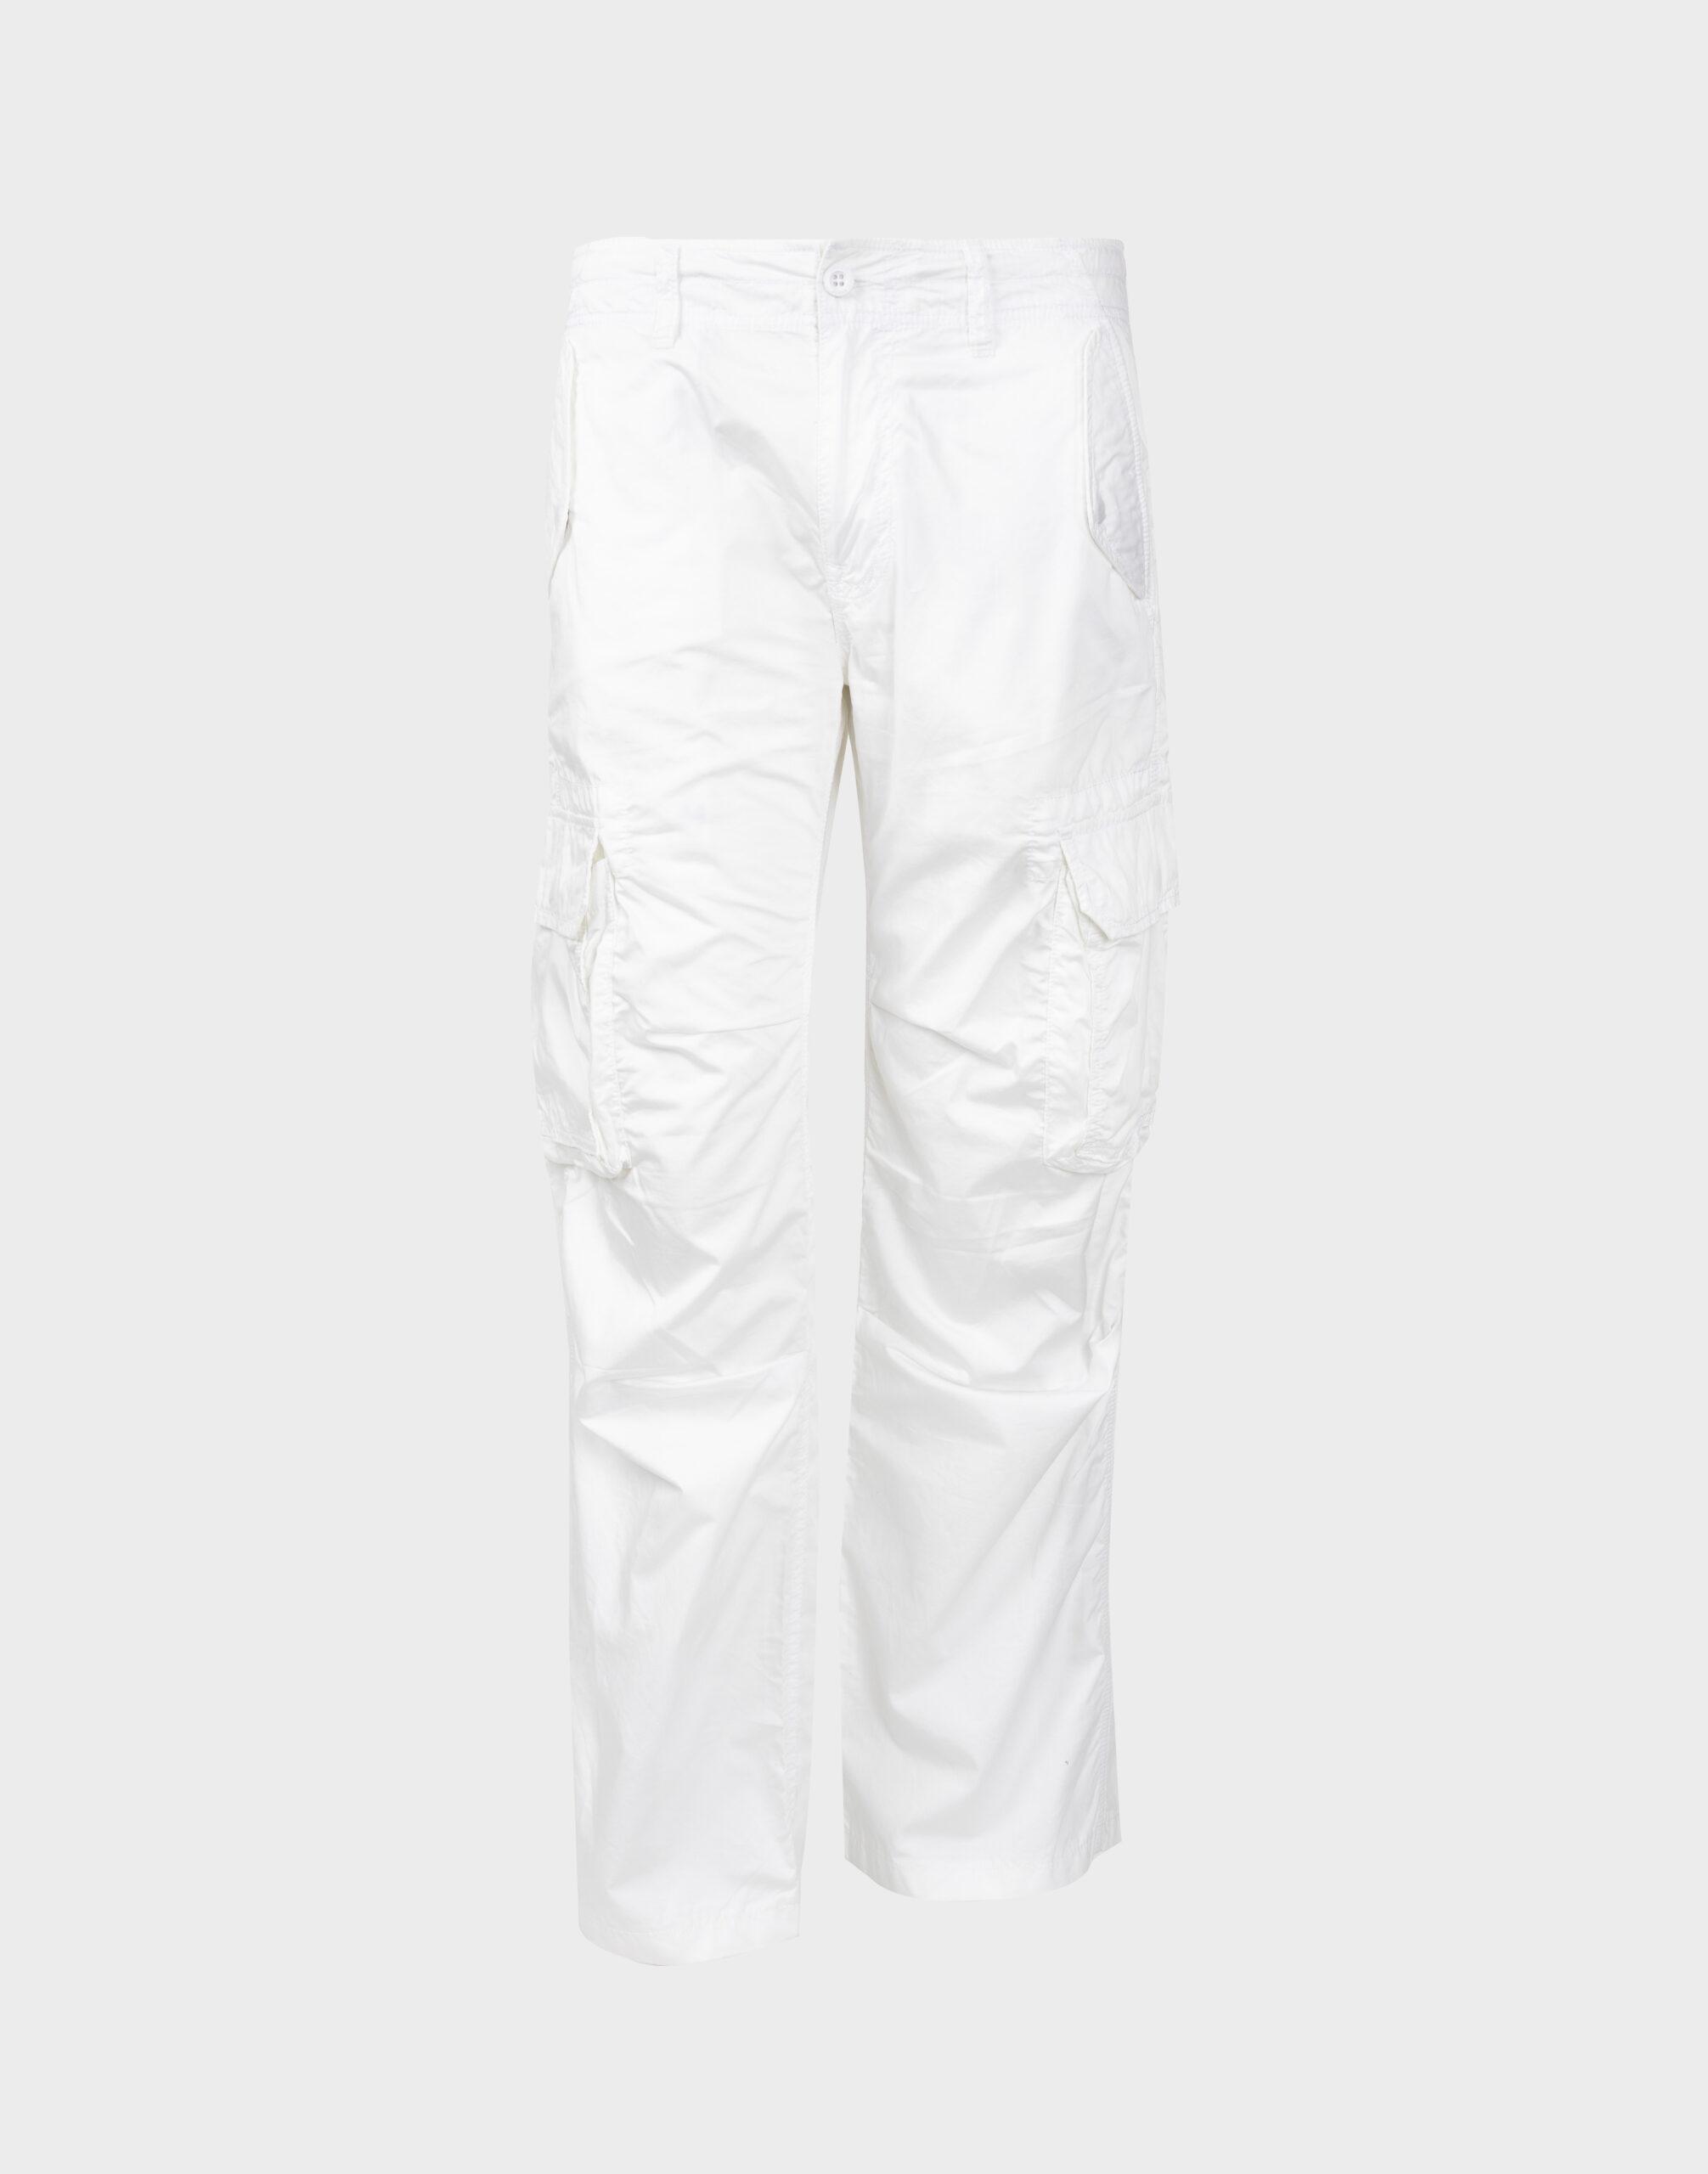 Men's white cargo pants with large leg pockets